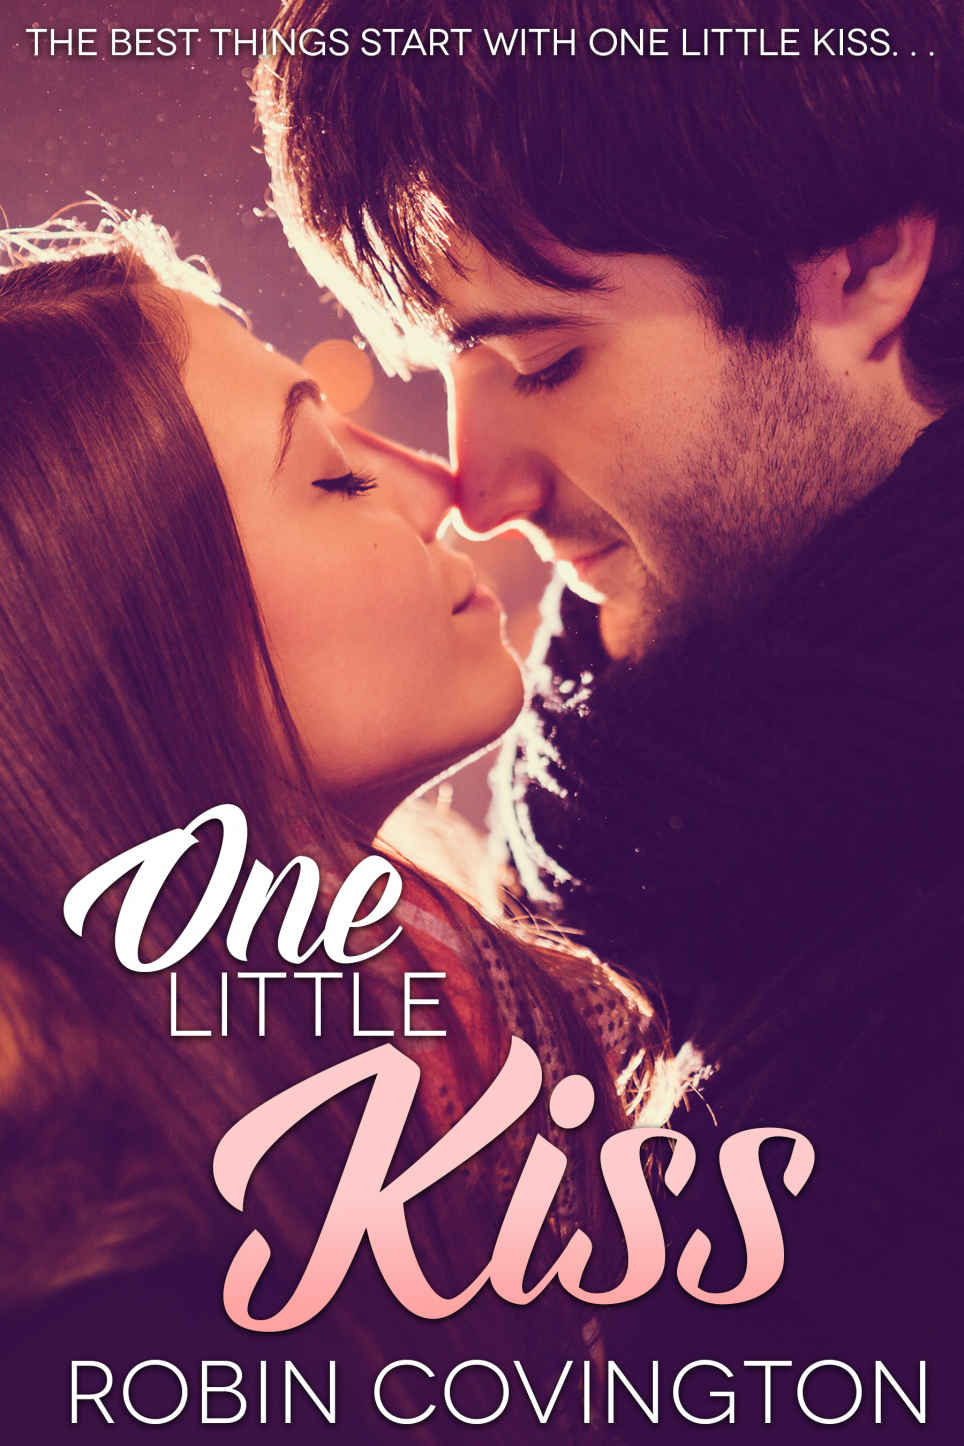 One Little Kiss by Robin Covington